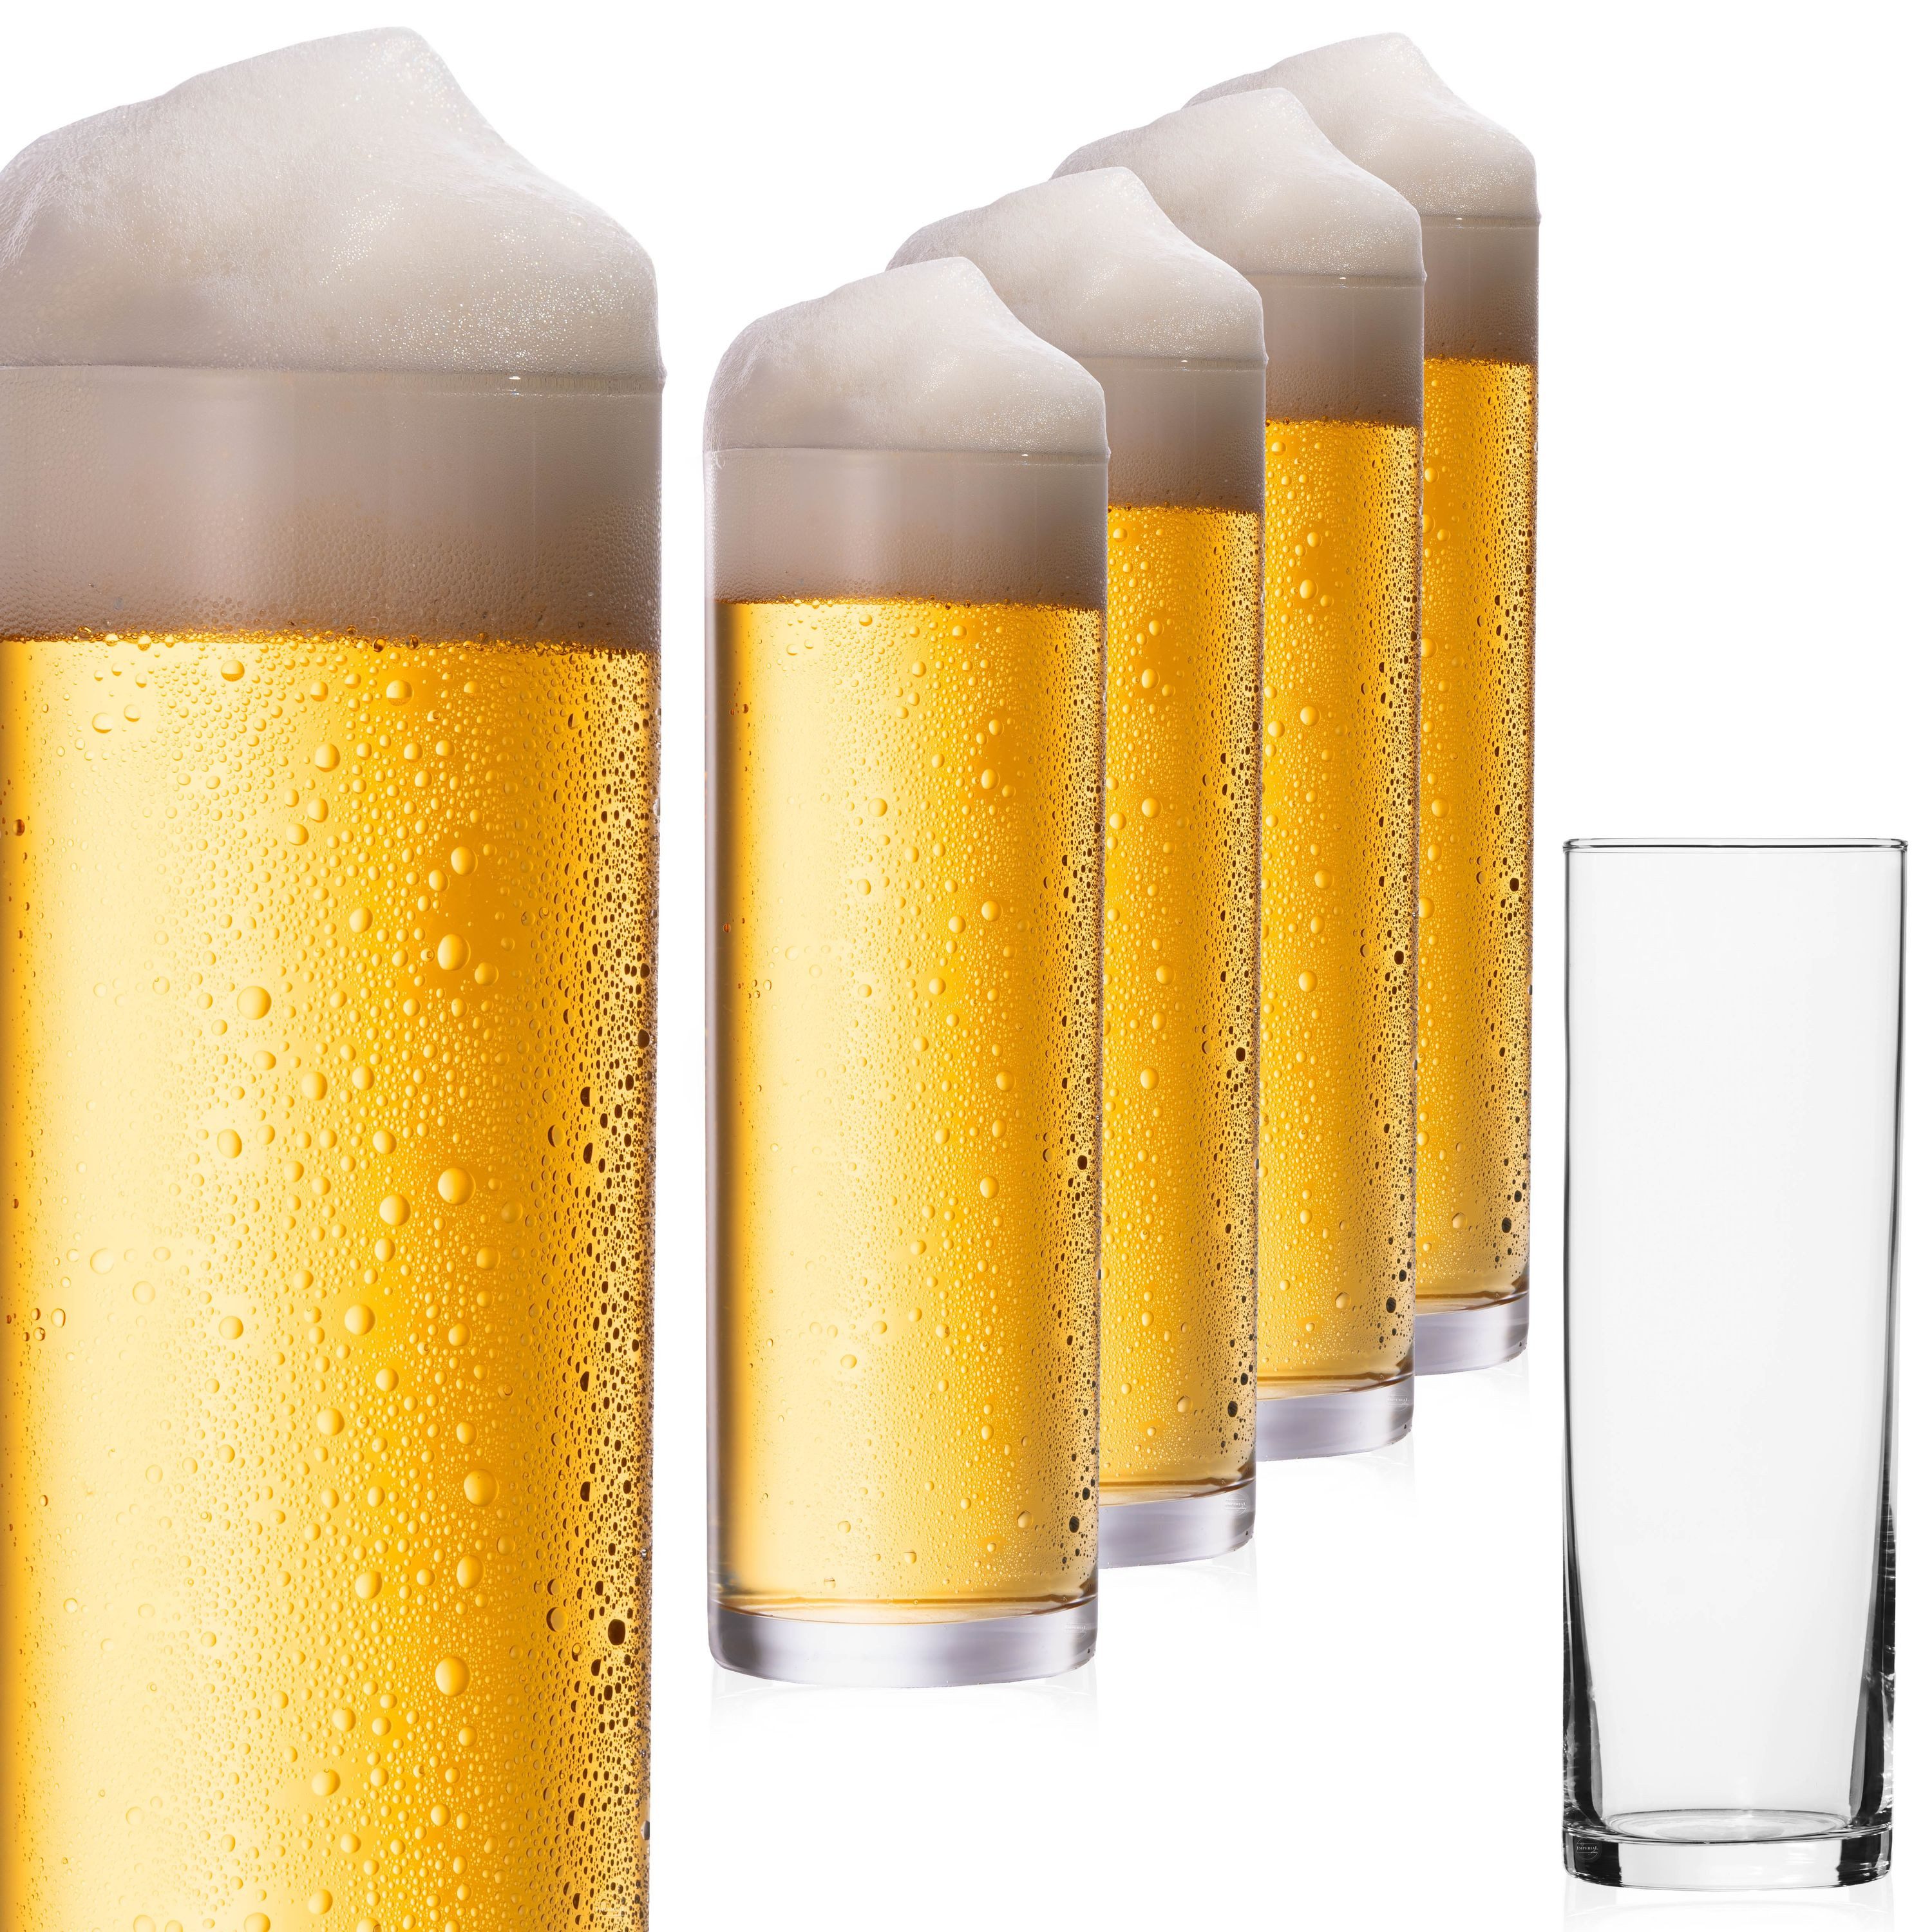 IMPERIAL glass Bierglas Kölschgläser Set 6-Teilig 200ml (max. 250ml), Glas, Kölschstangen 0,2L Bierstangen Bierglas Spülmaschinenfest